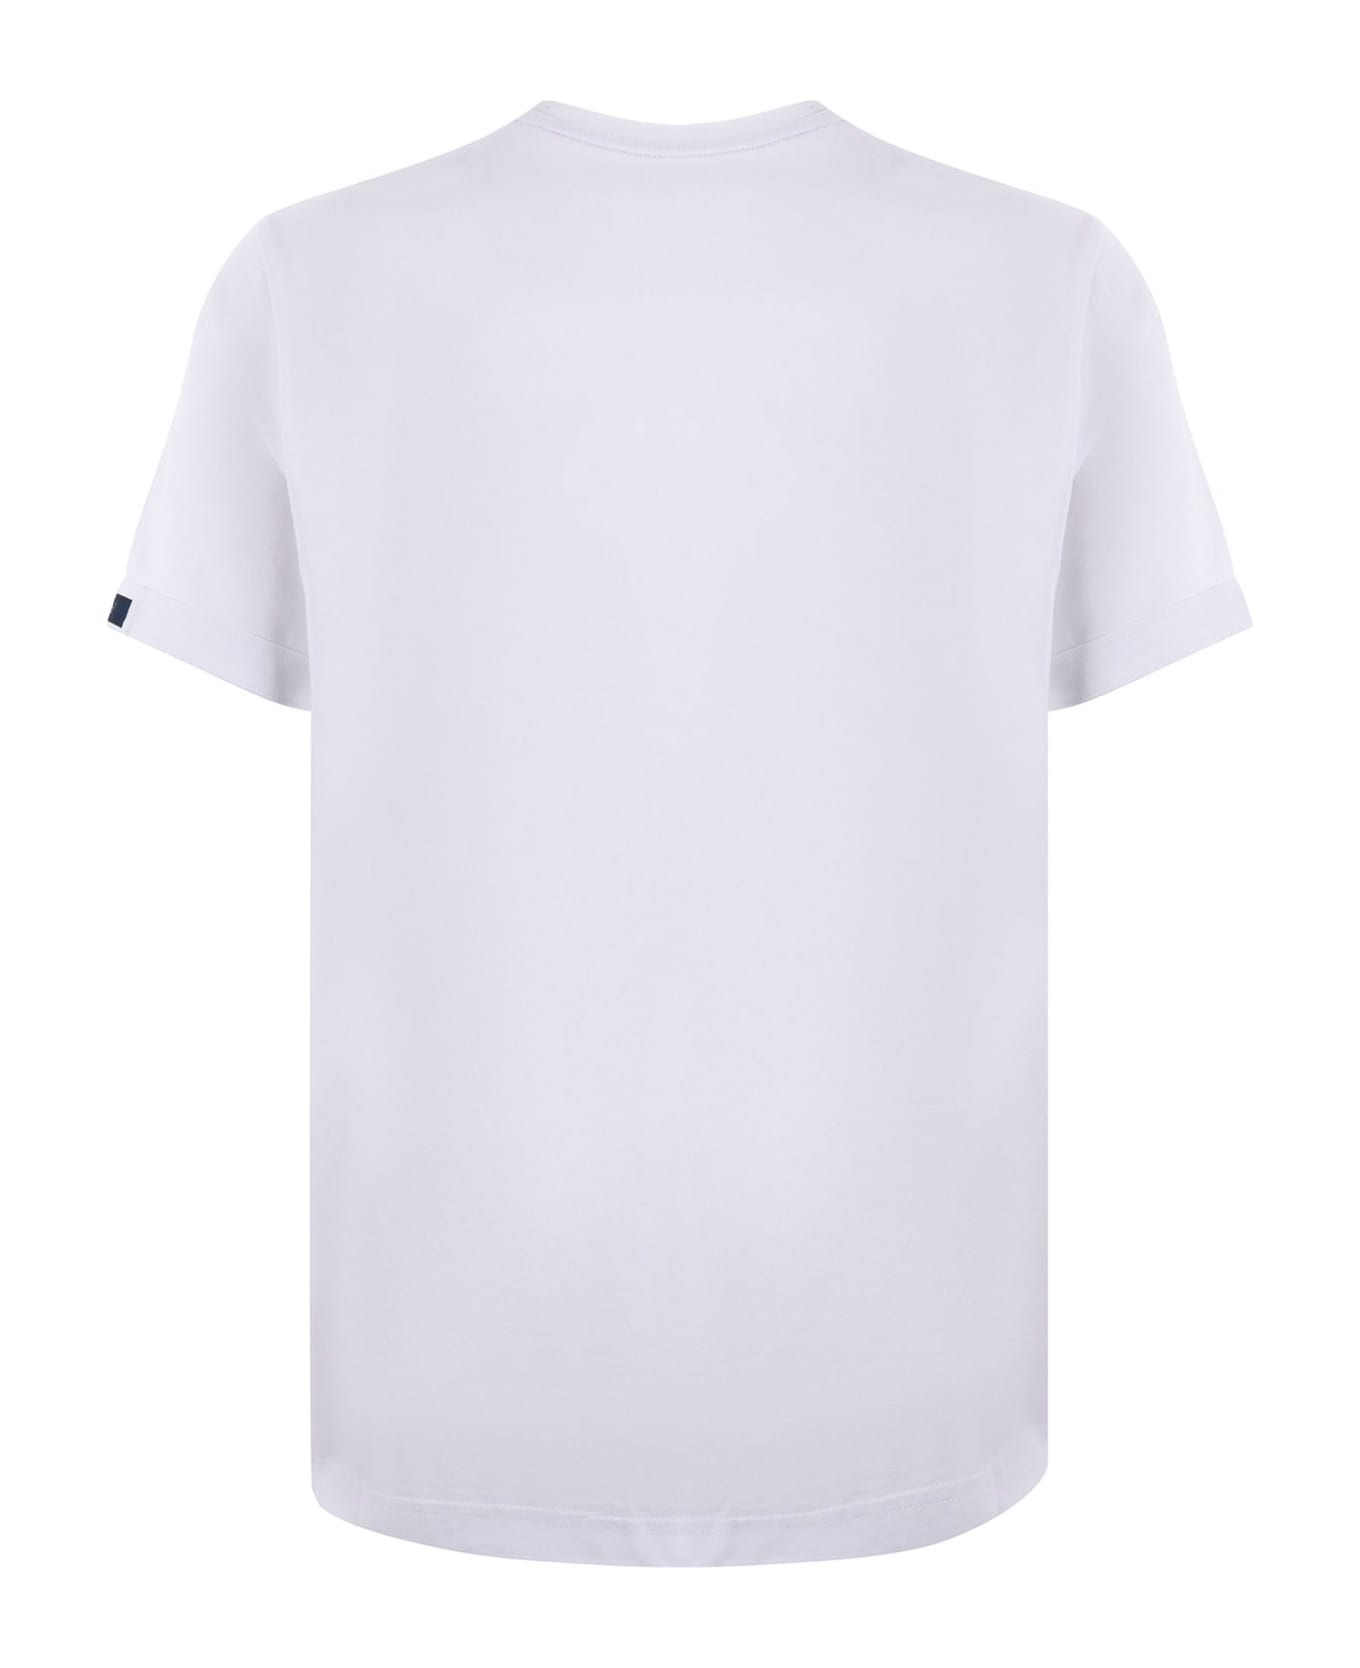 Fay White Cotton T-shirt - White シャツ